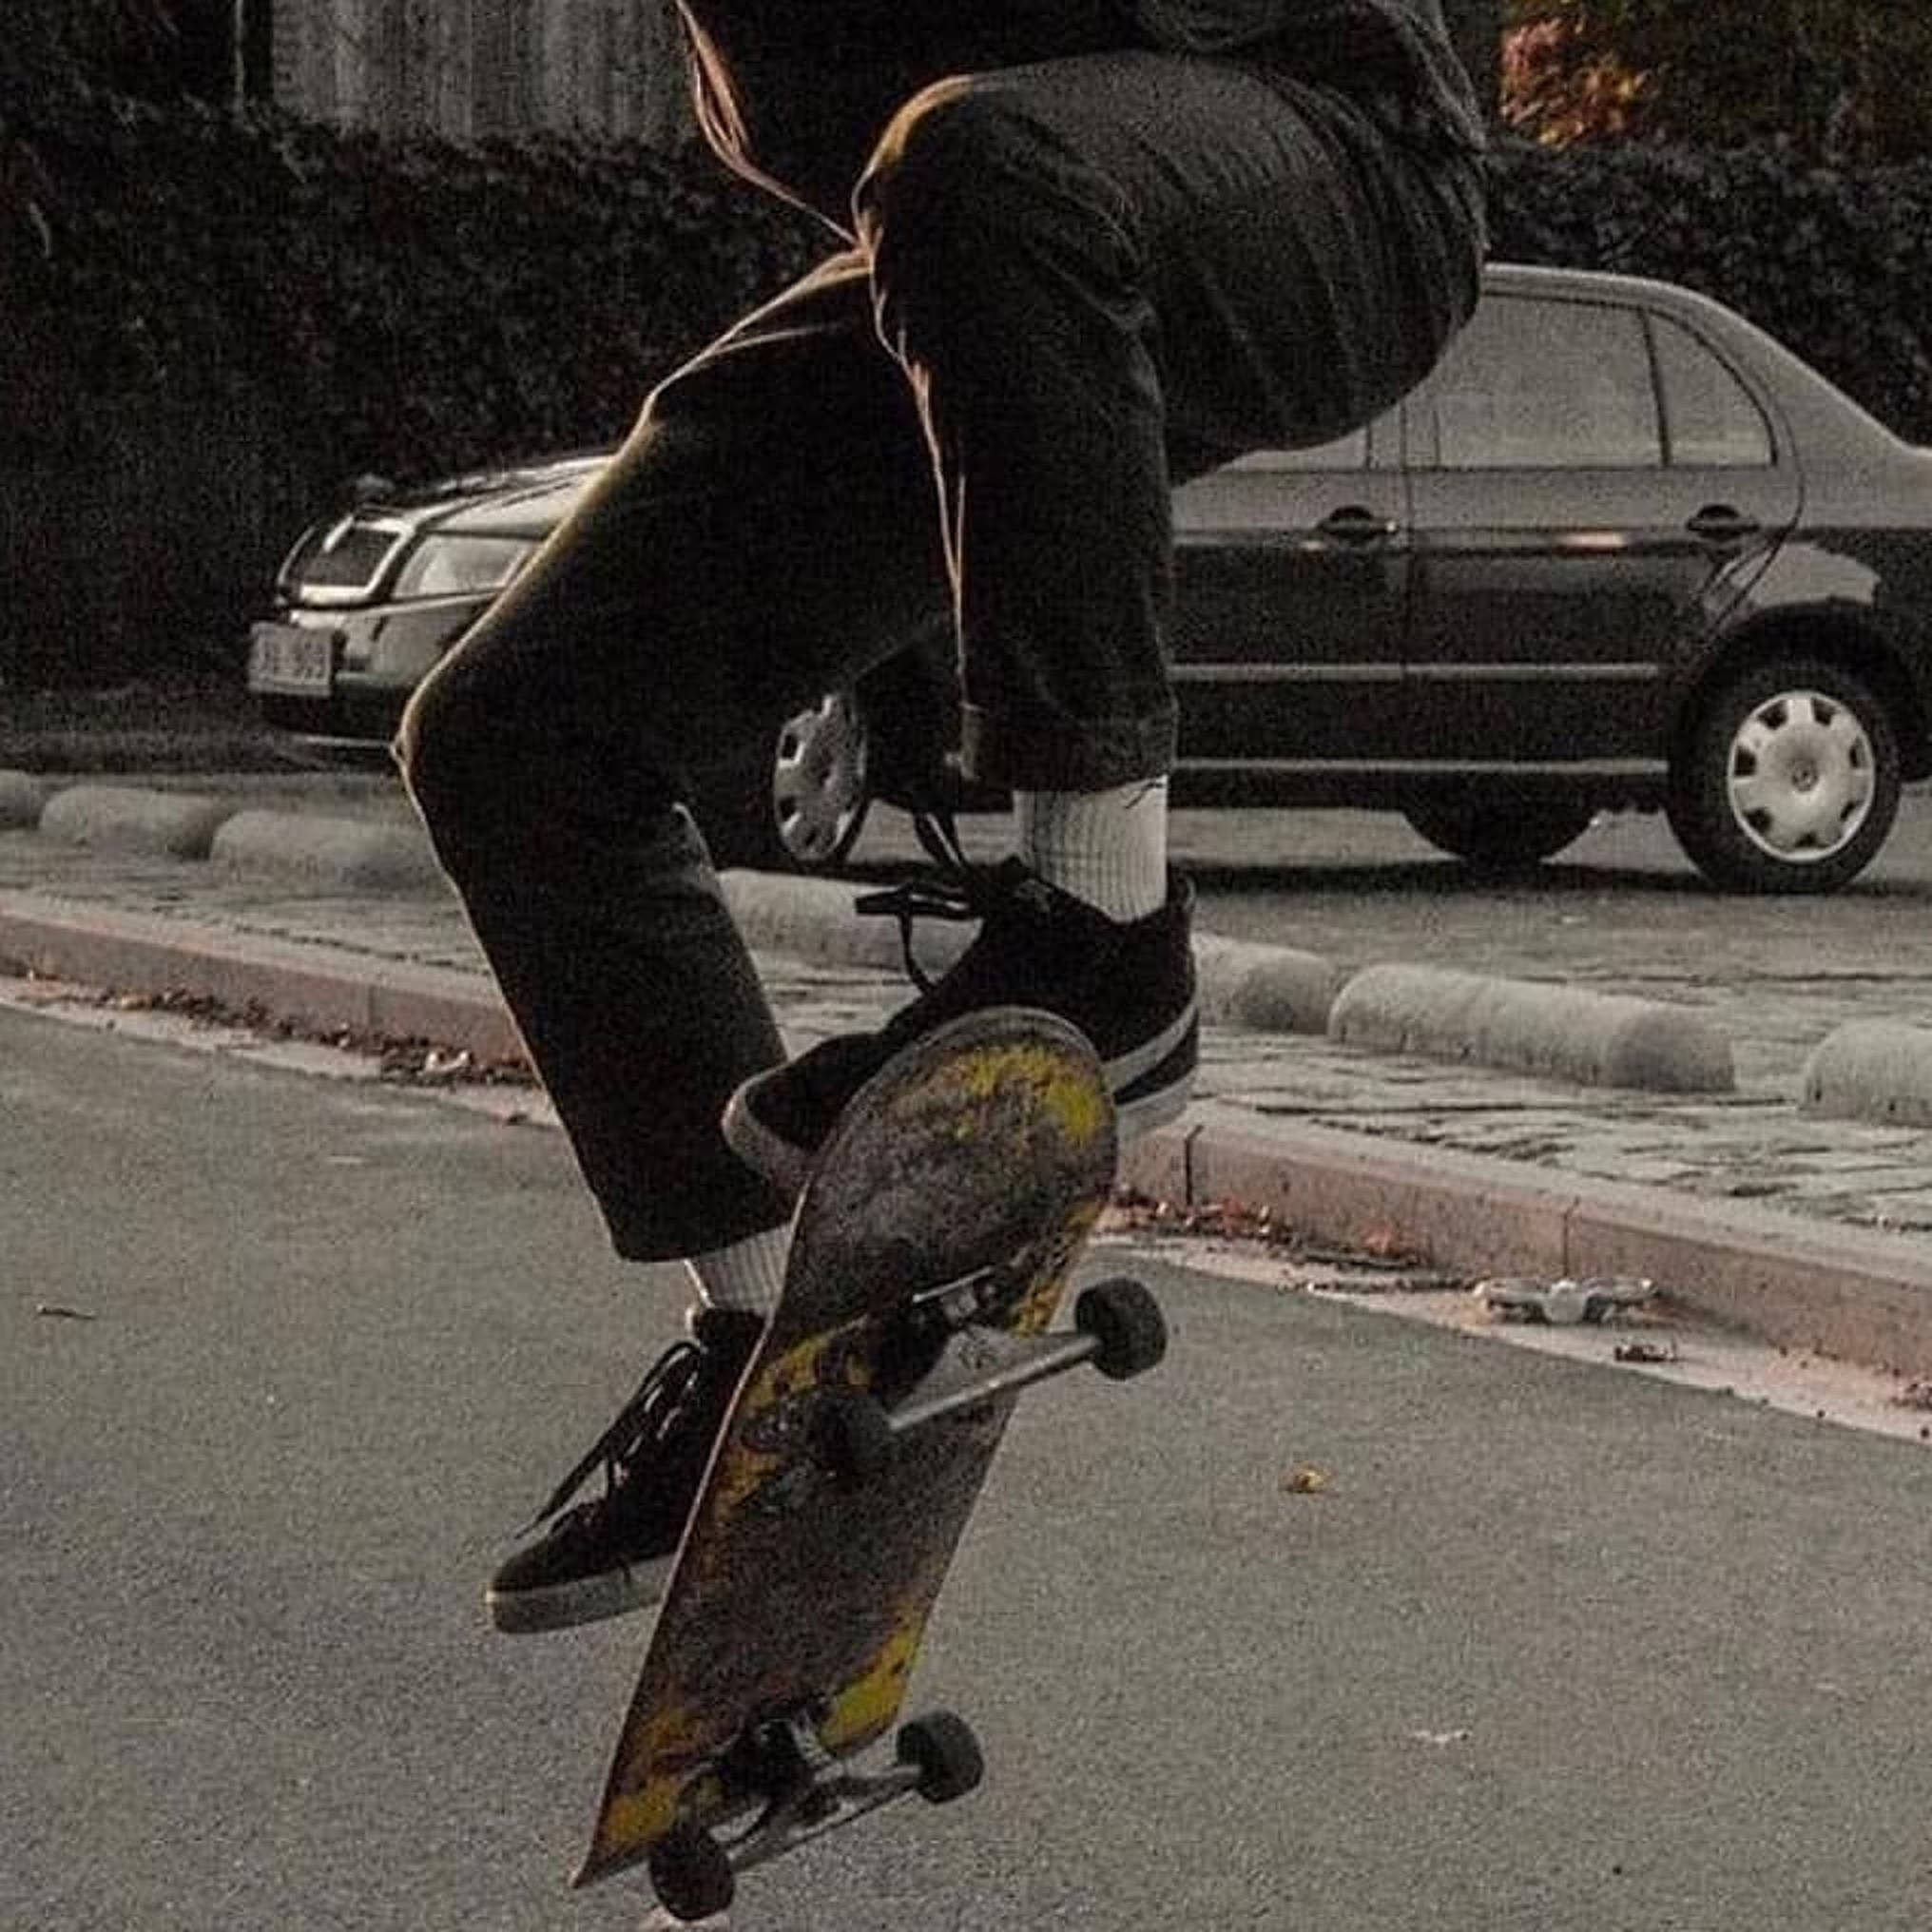 Download Skater Boy In Action Aesthetic Wallpaper